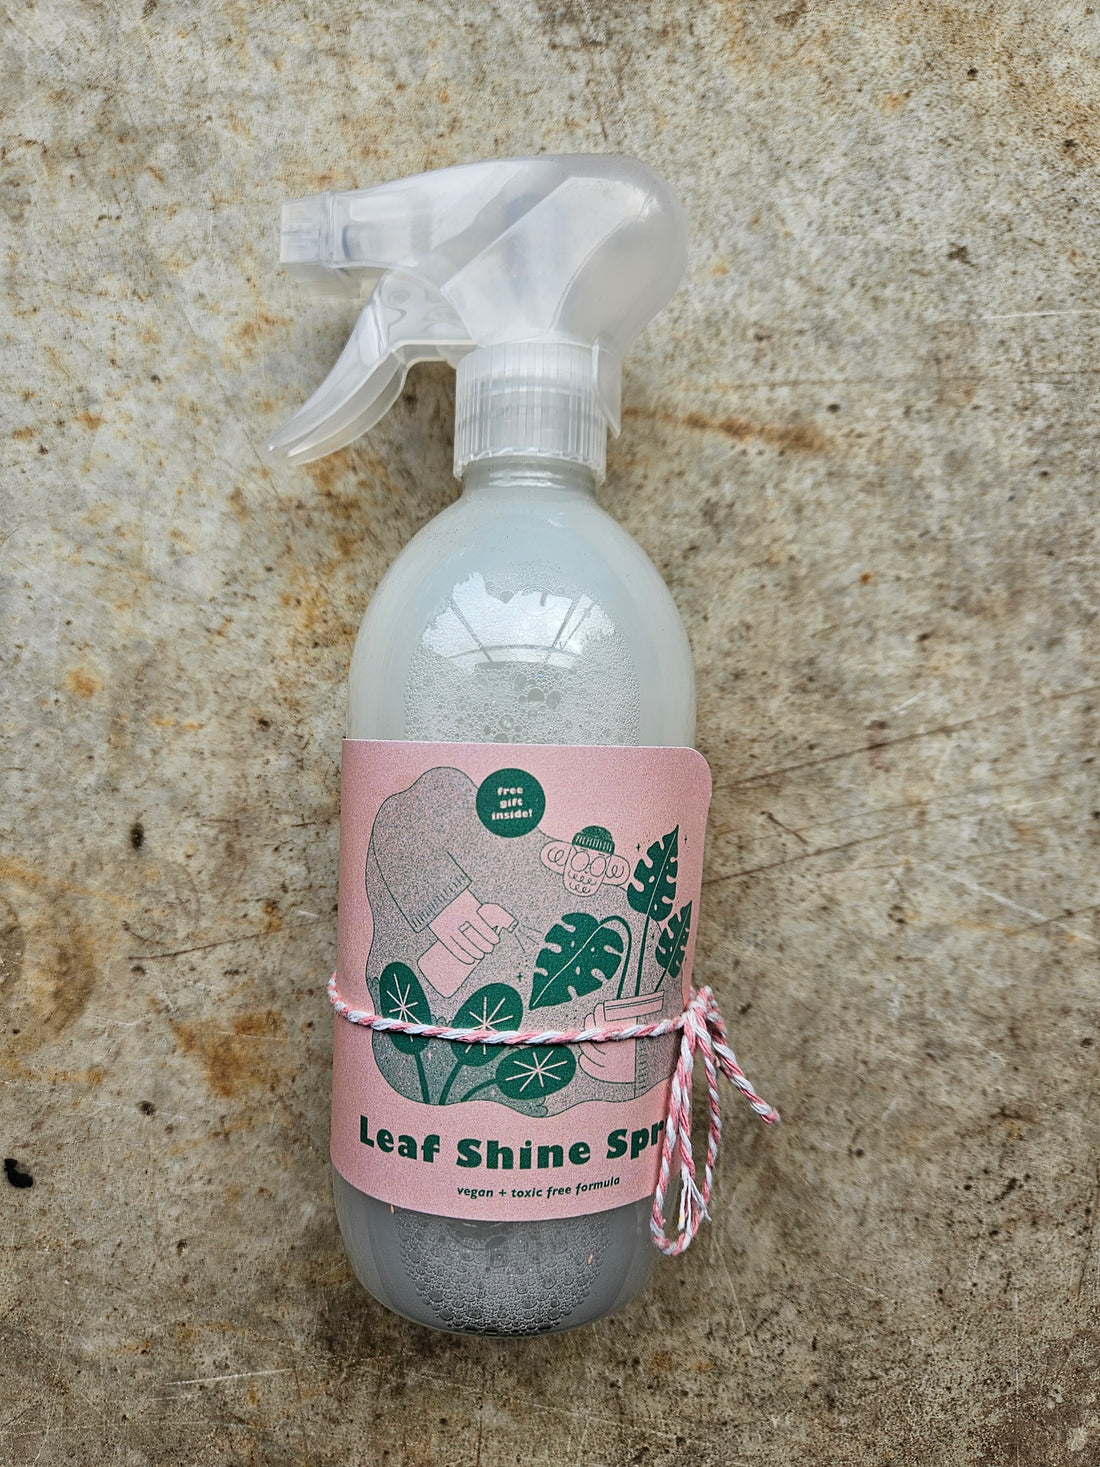 Leaf shine spray by Stem &amp; Co